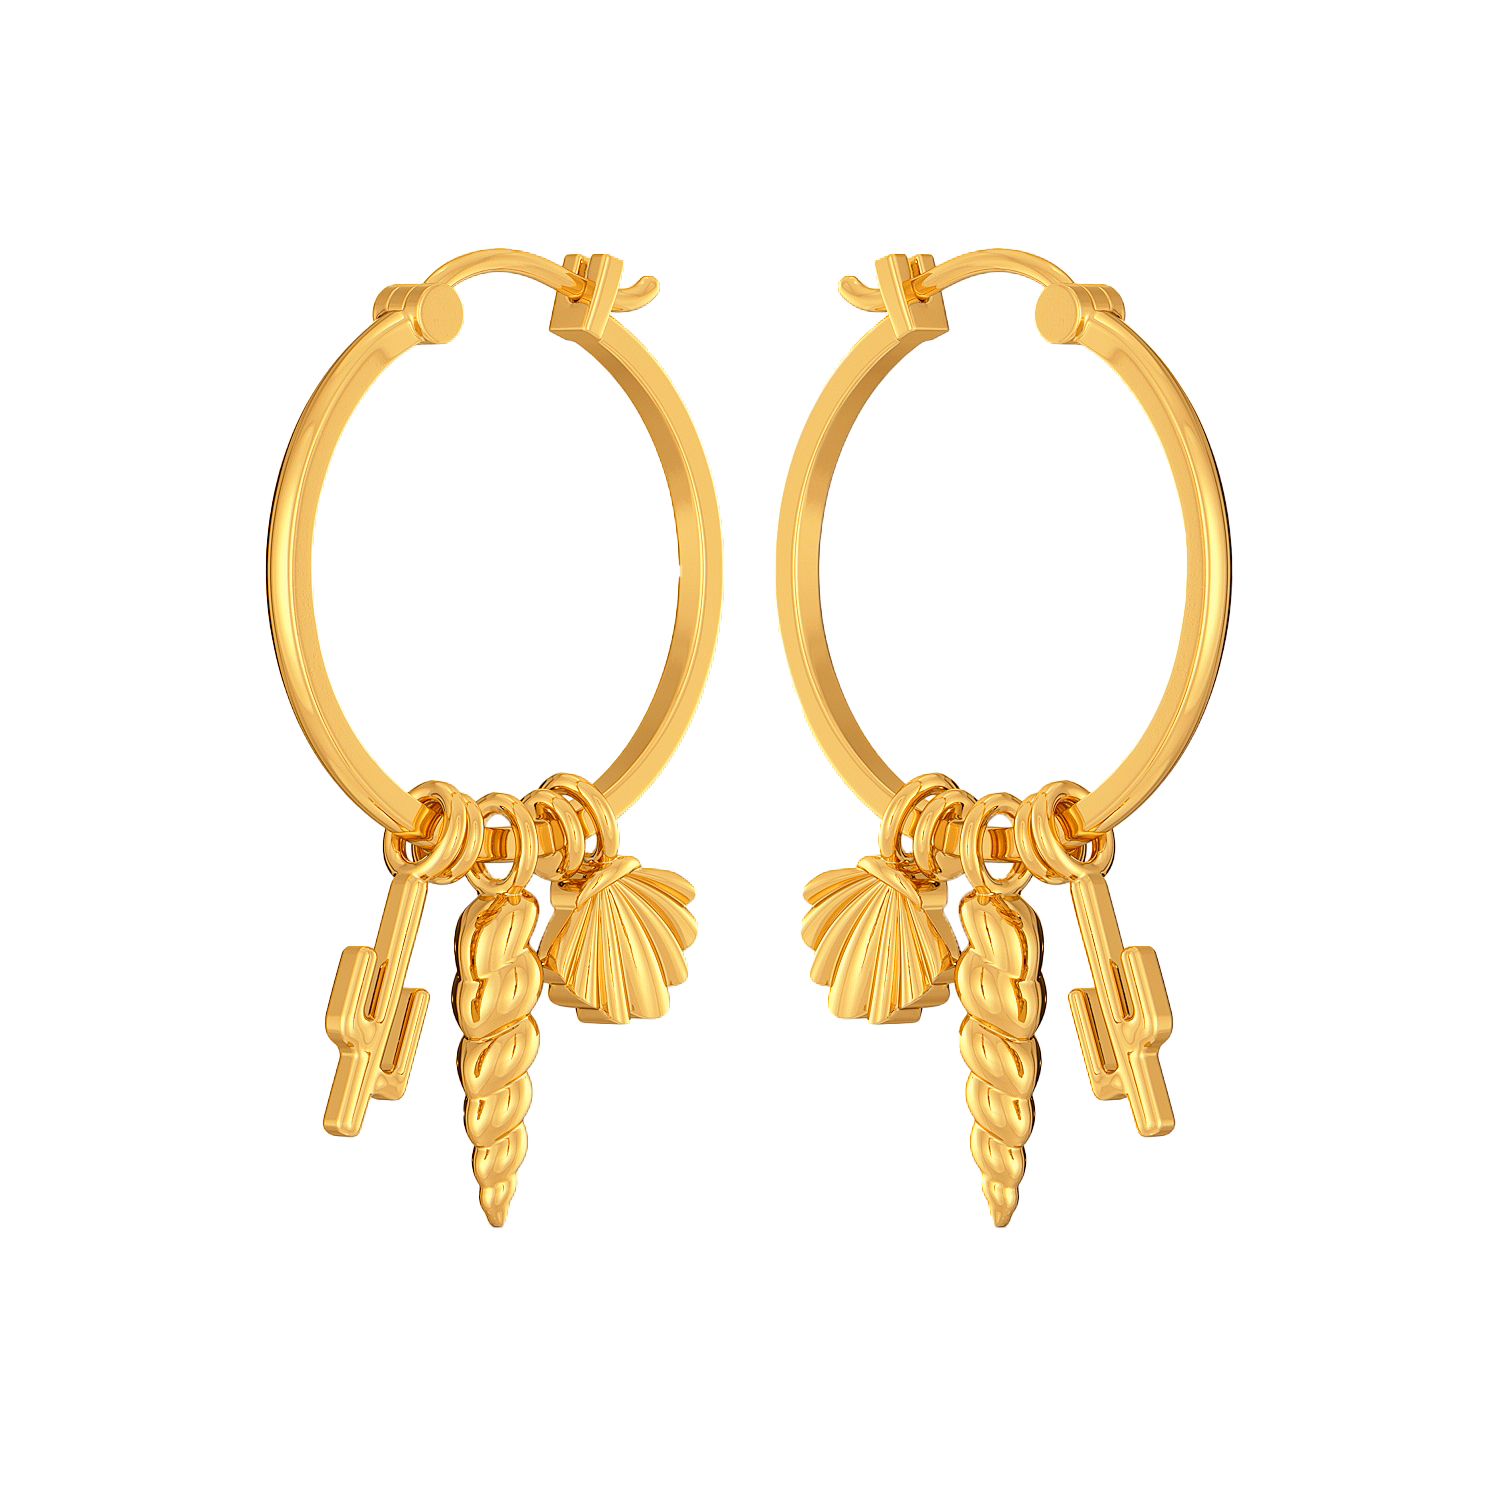 The Beachy Bunch Gold Earrings